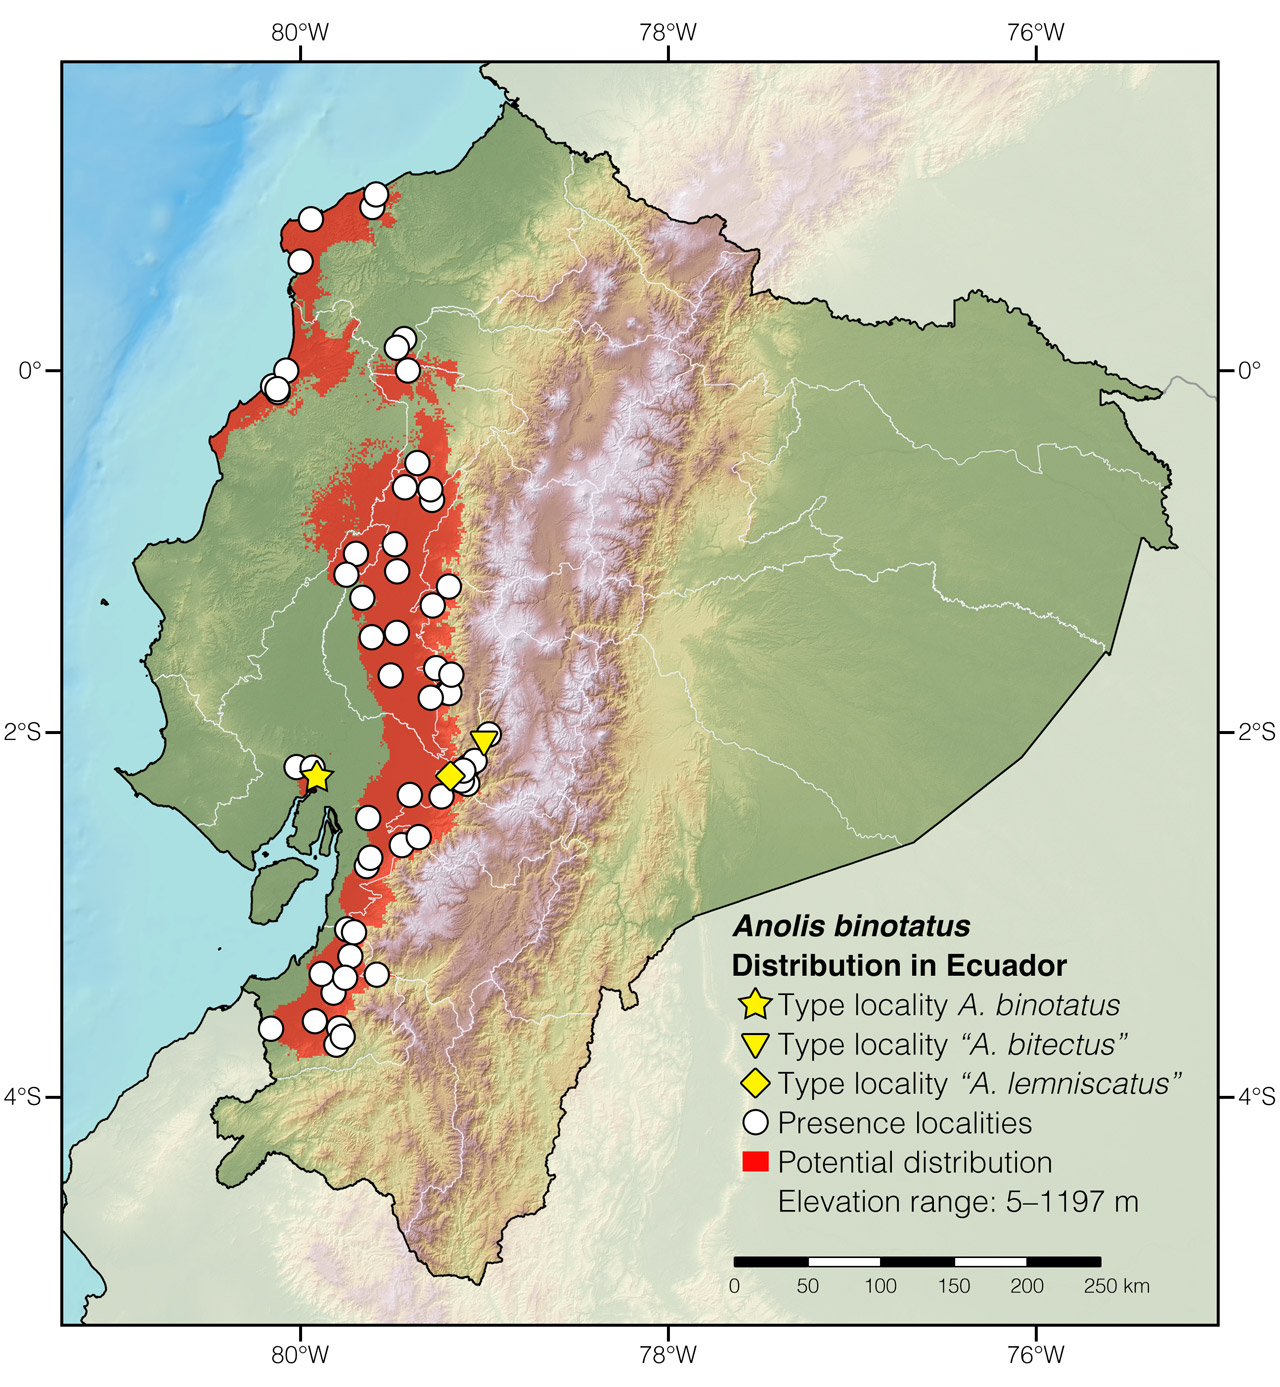 Distribution of Anolis binotatus in Ecuador